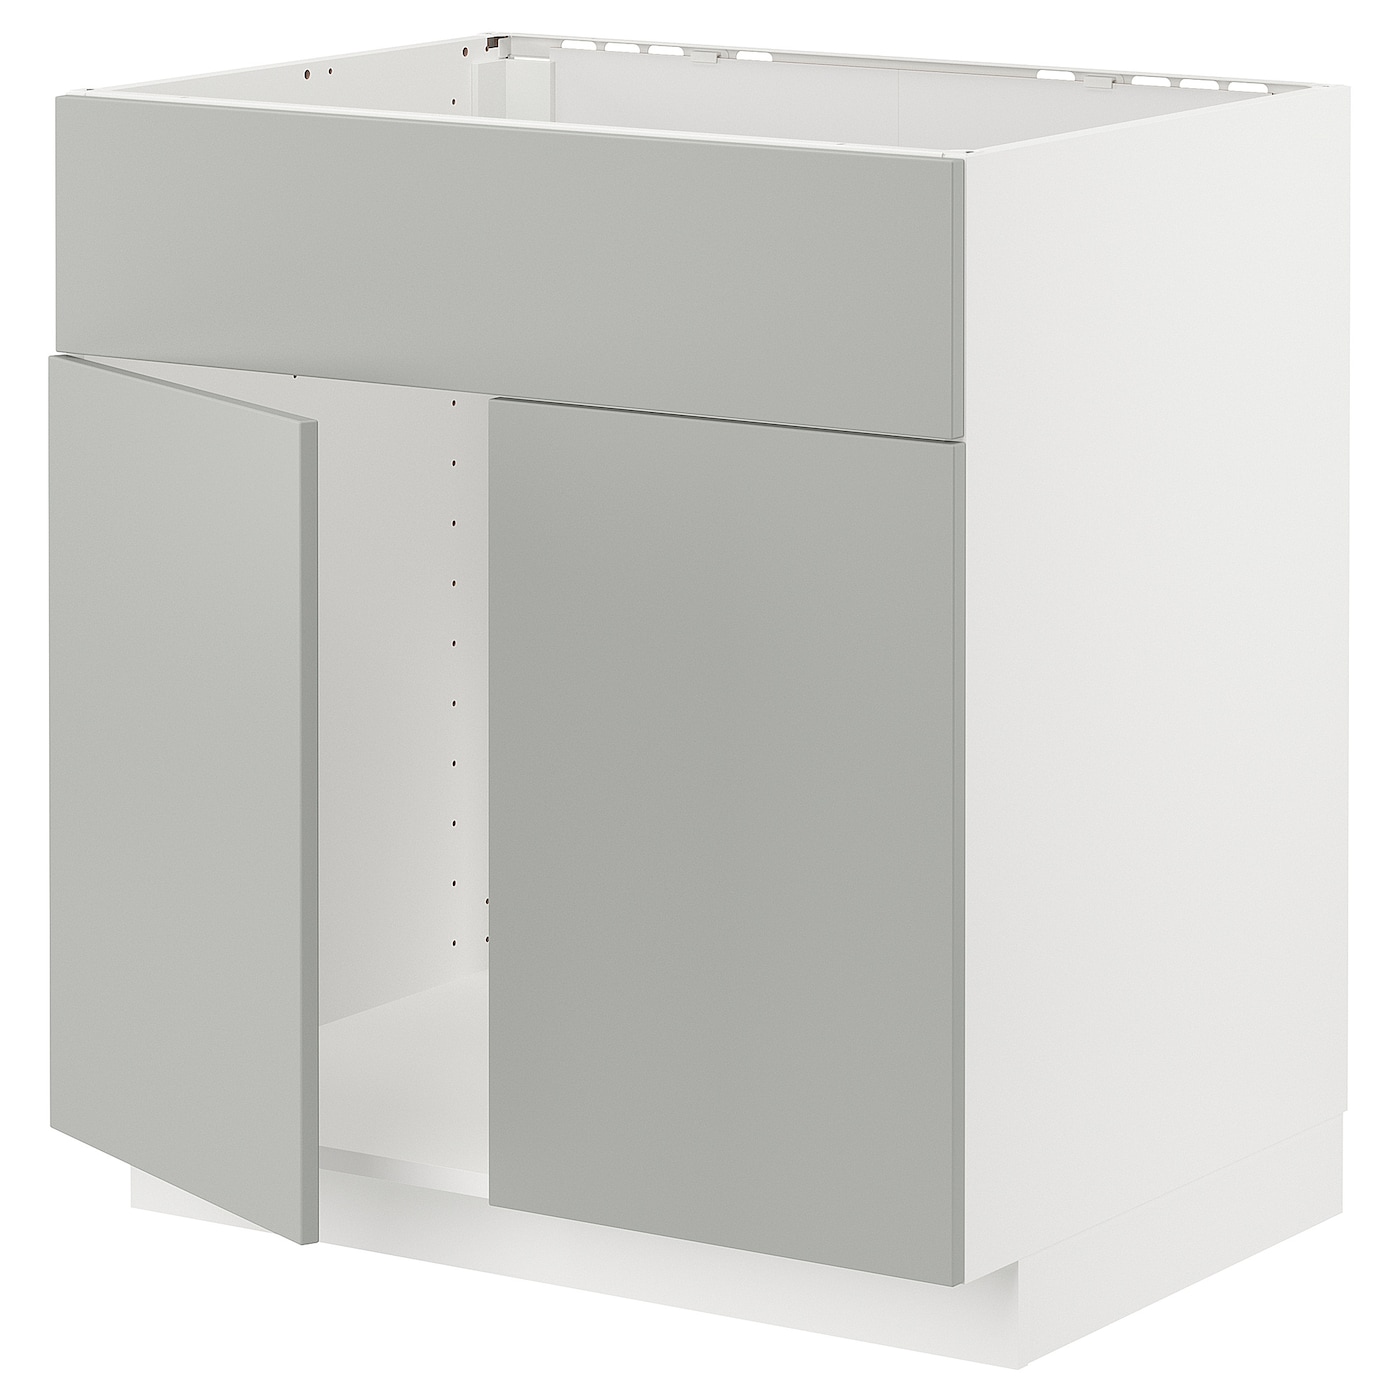 Напольный шкаф - METOD IKEA/ МЕТОД ИКЕА,  88х80 см, белый/светло-серый